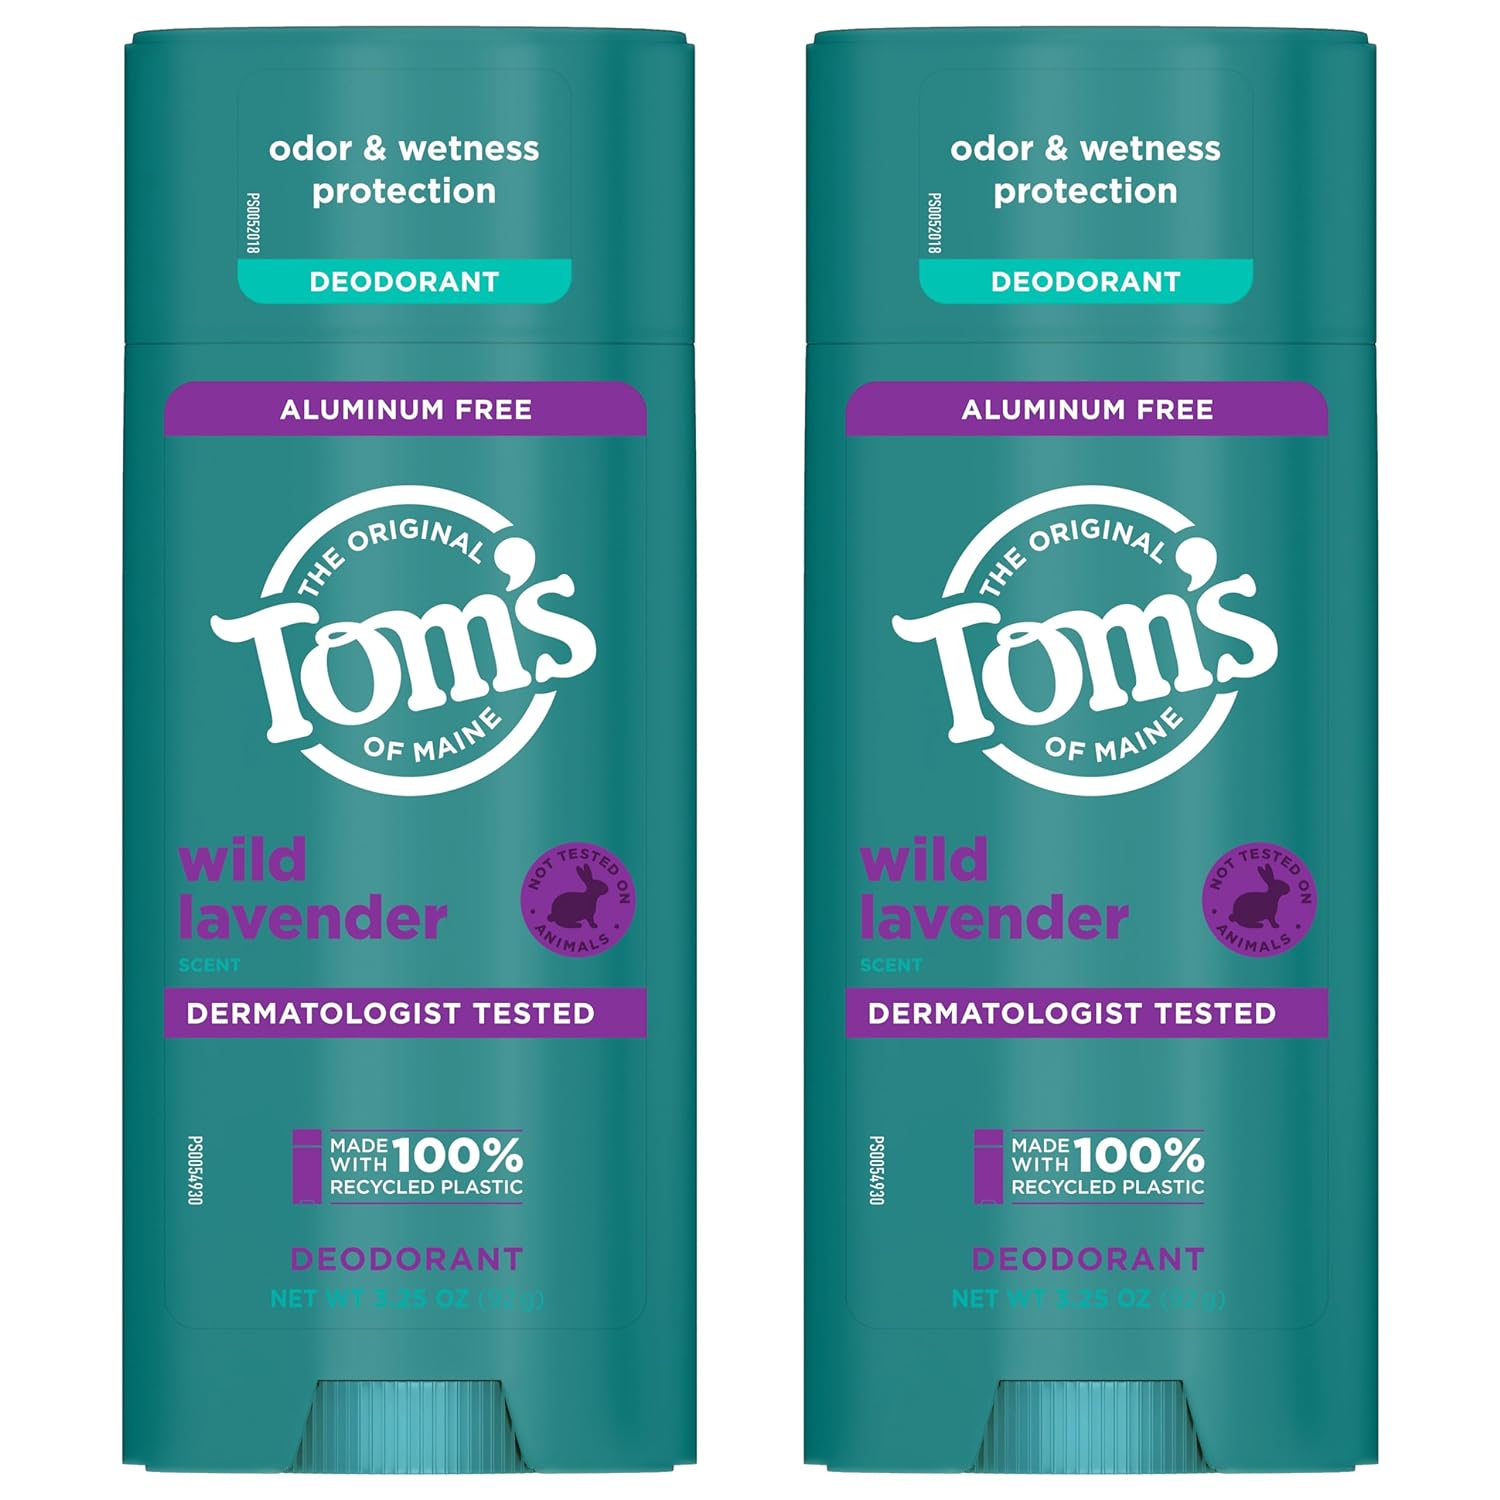 Tom’s of Maine Wild Lavender Natural Deodorant for Women and Men, Aluminum Free, 3.25 oz, 2-Pack